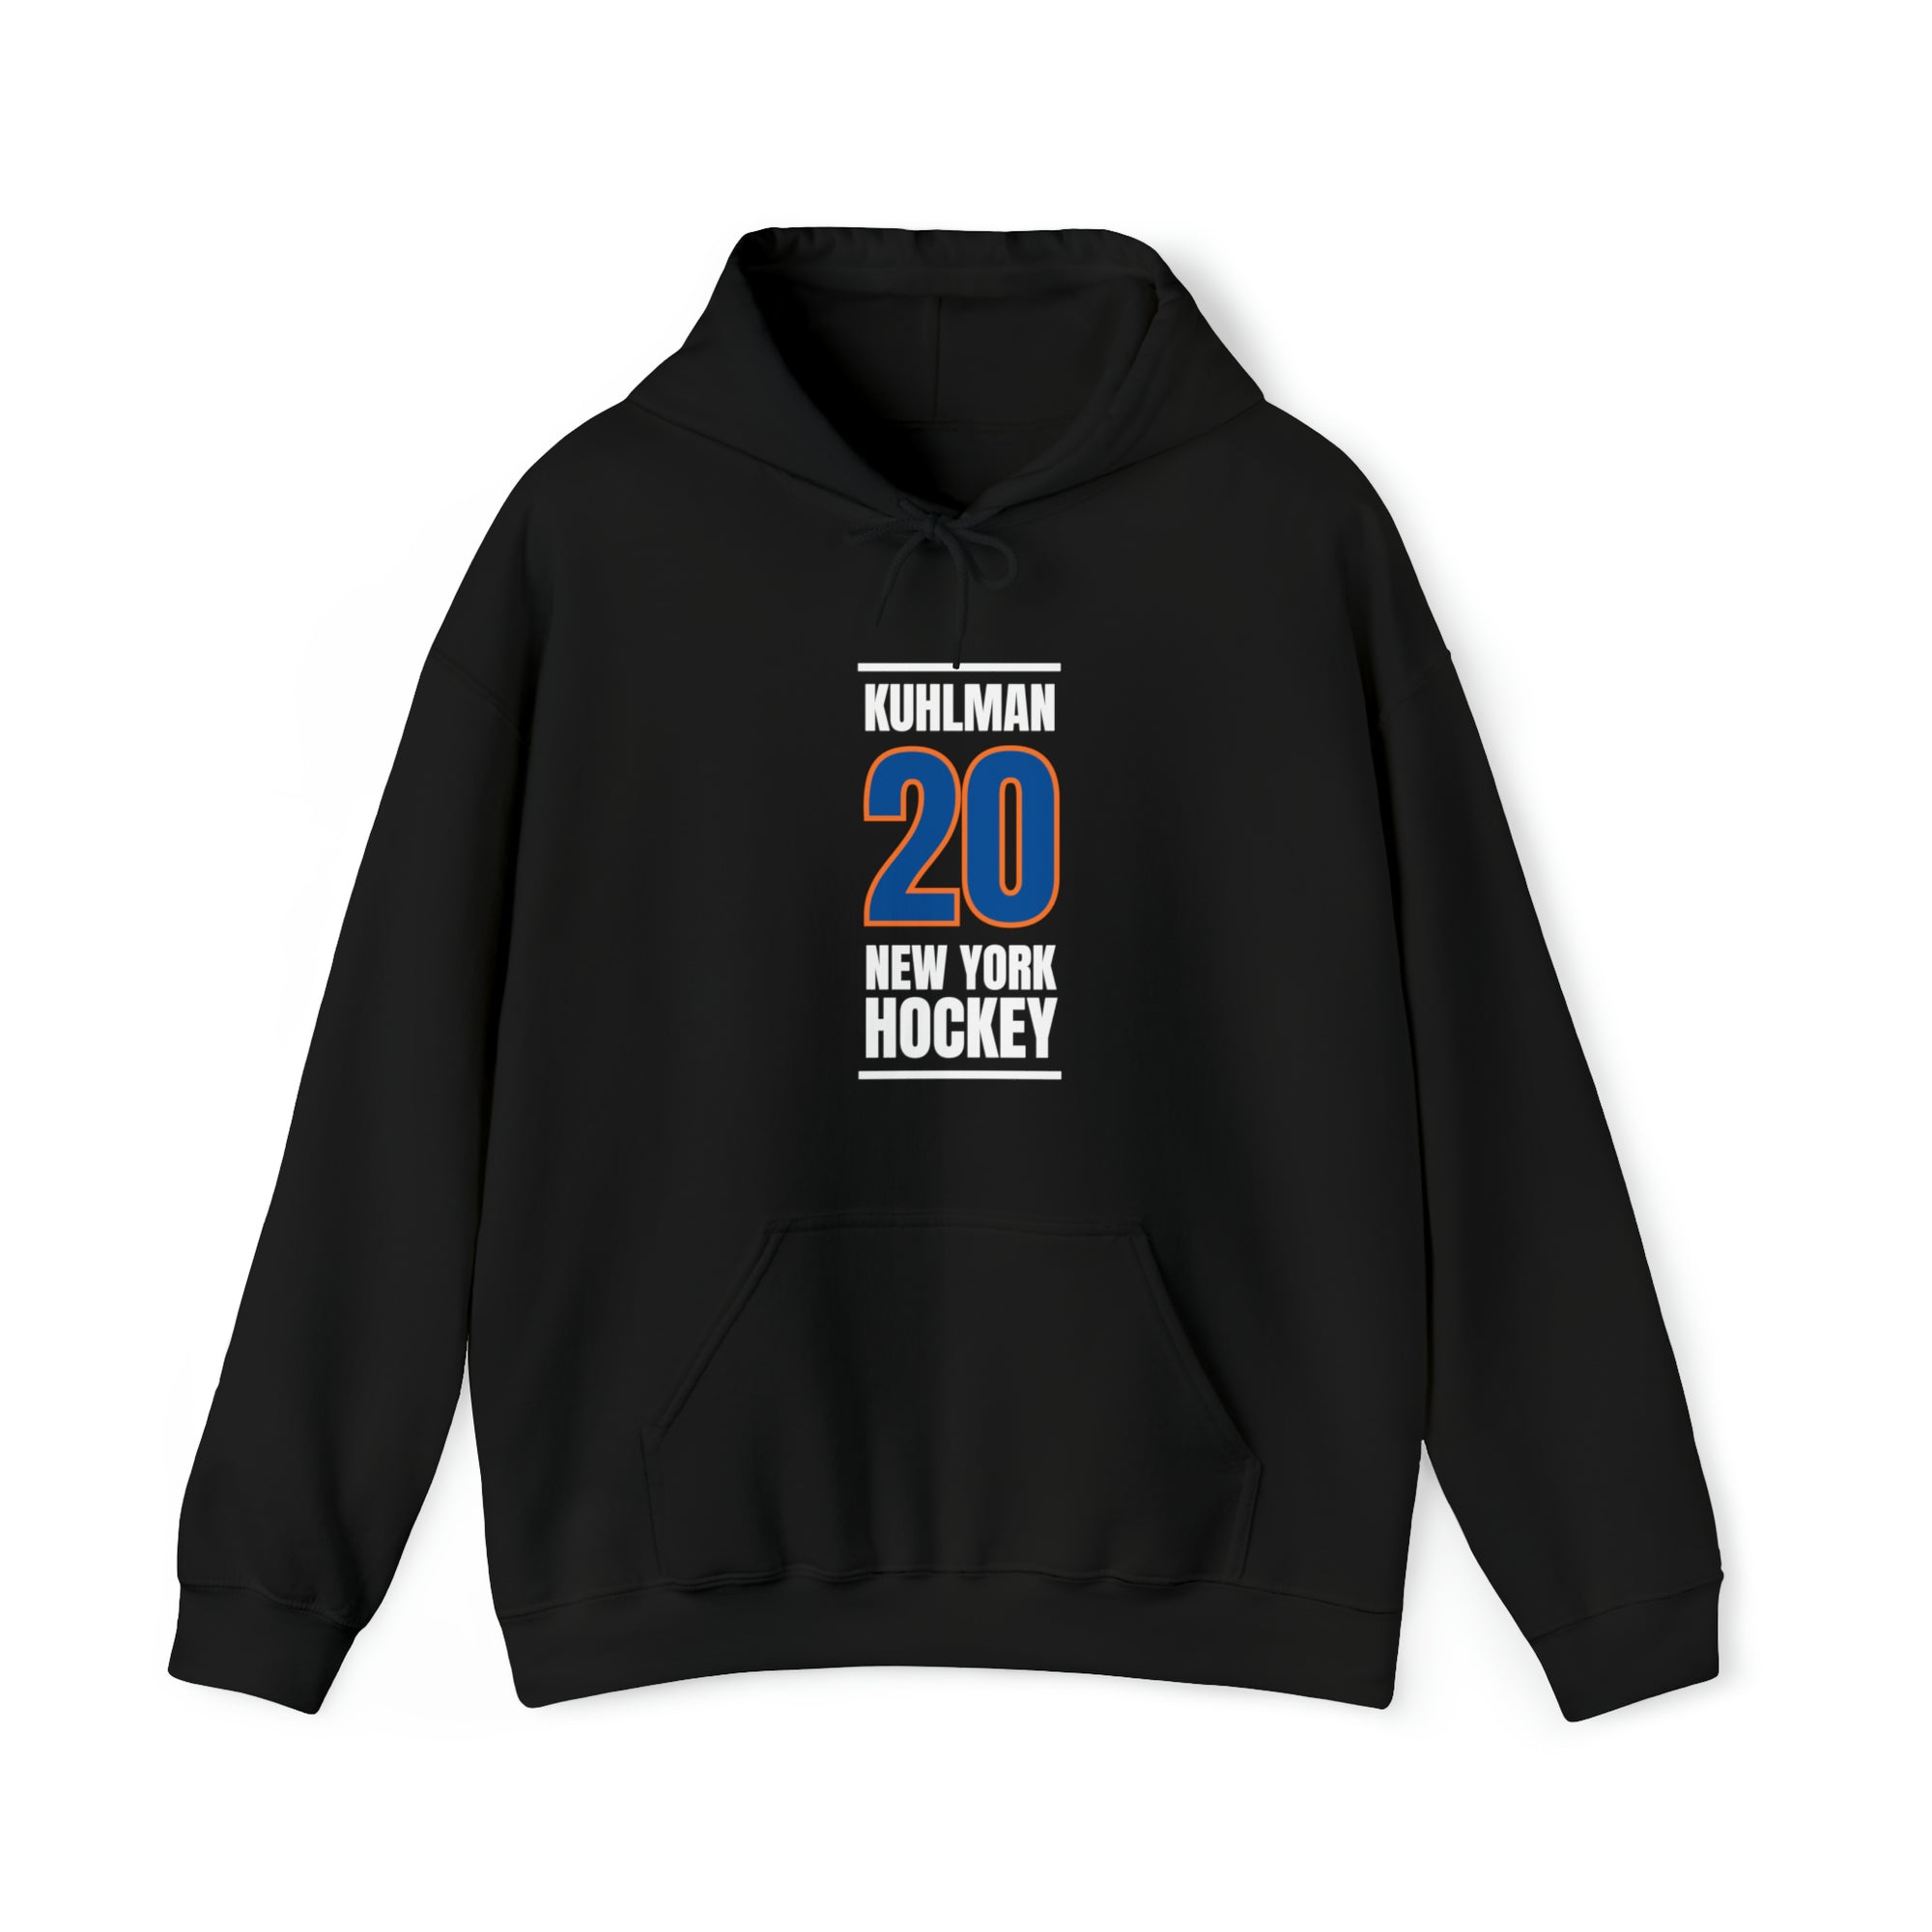 Kuhlman 20 New York Hockey Blue Vertical Design Unisex Hooded Sweatshirt